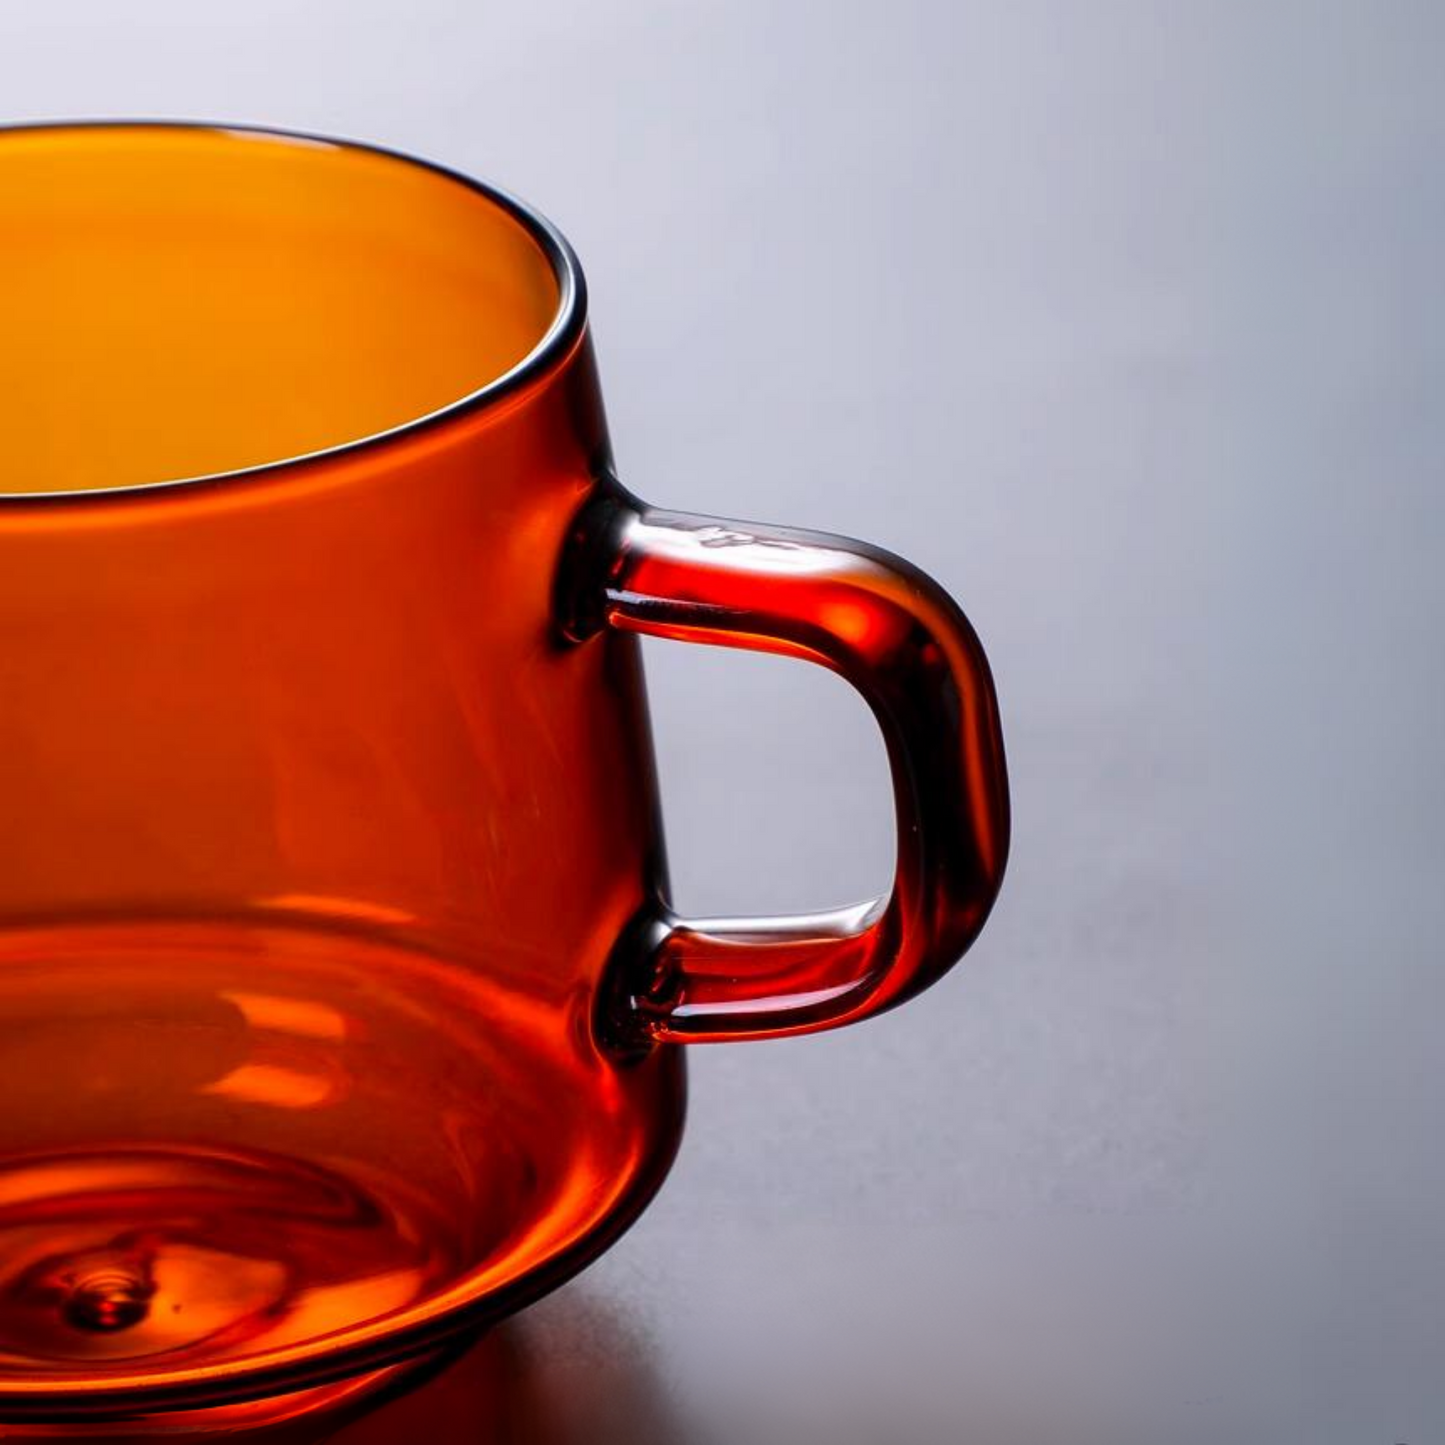 Handblown Amber Glass Cup and Saucer Set